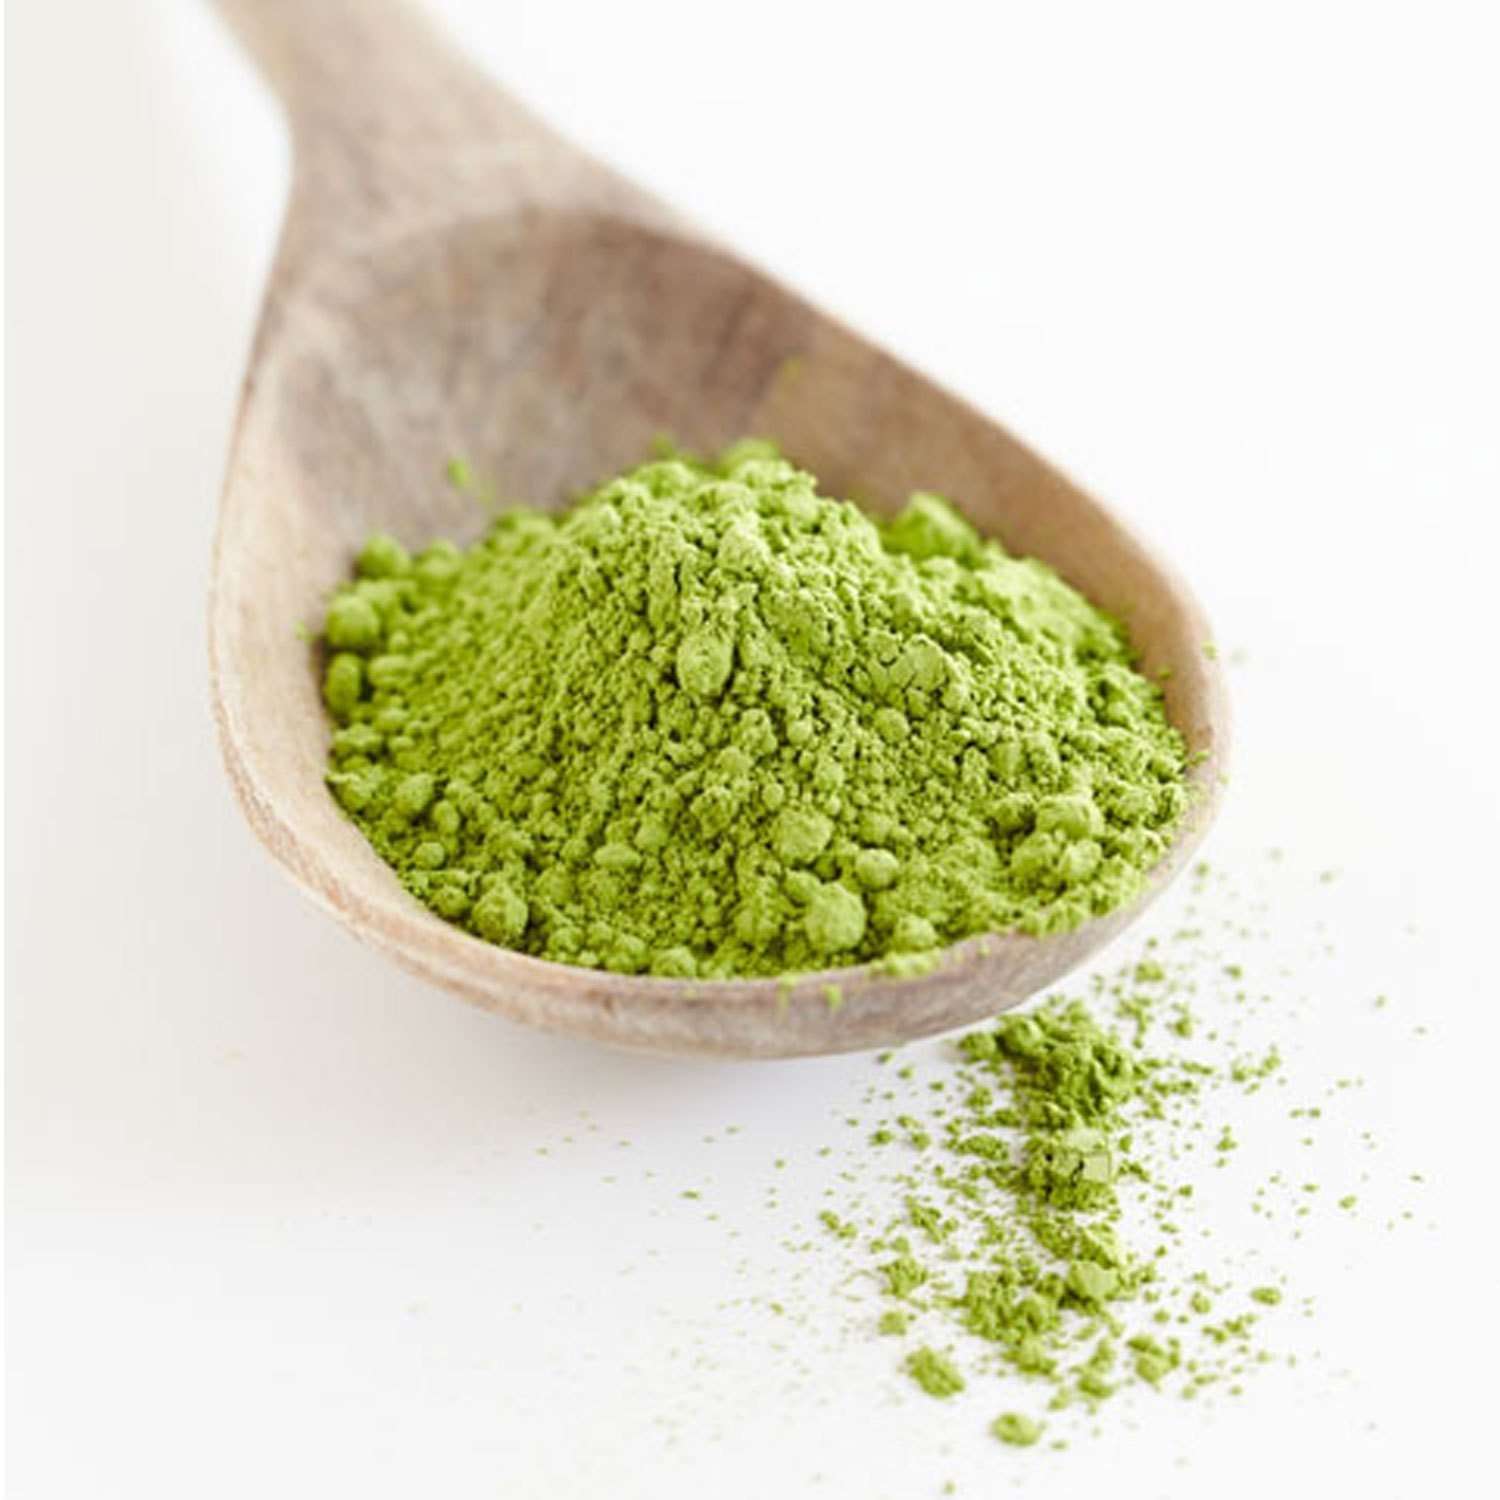 MatchaDNA Organic Powdered Matcha Green Tea, 10 Ounce